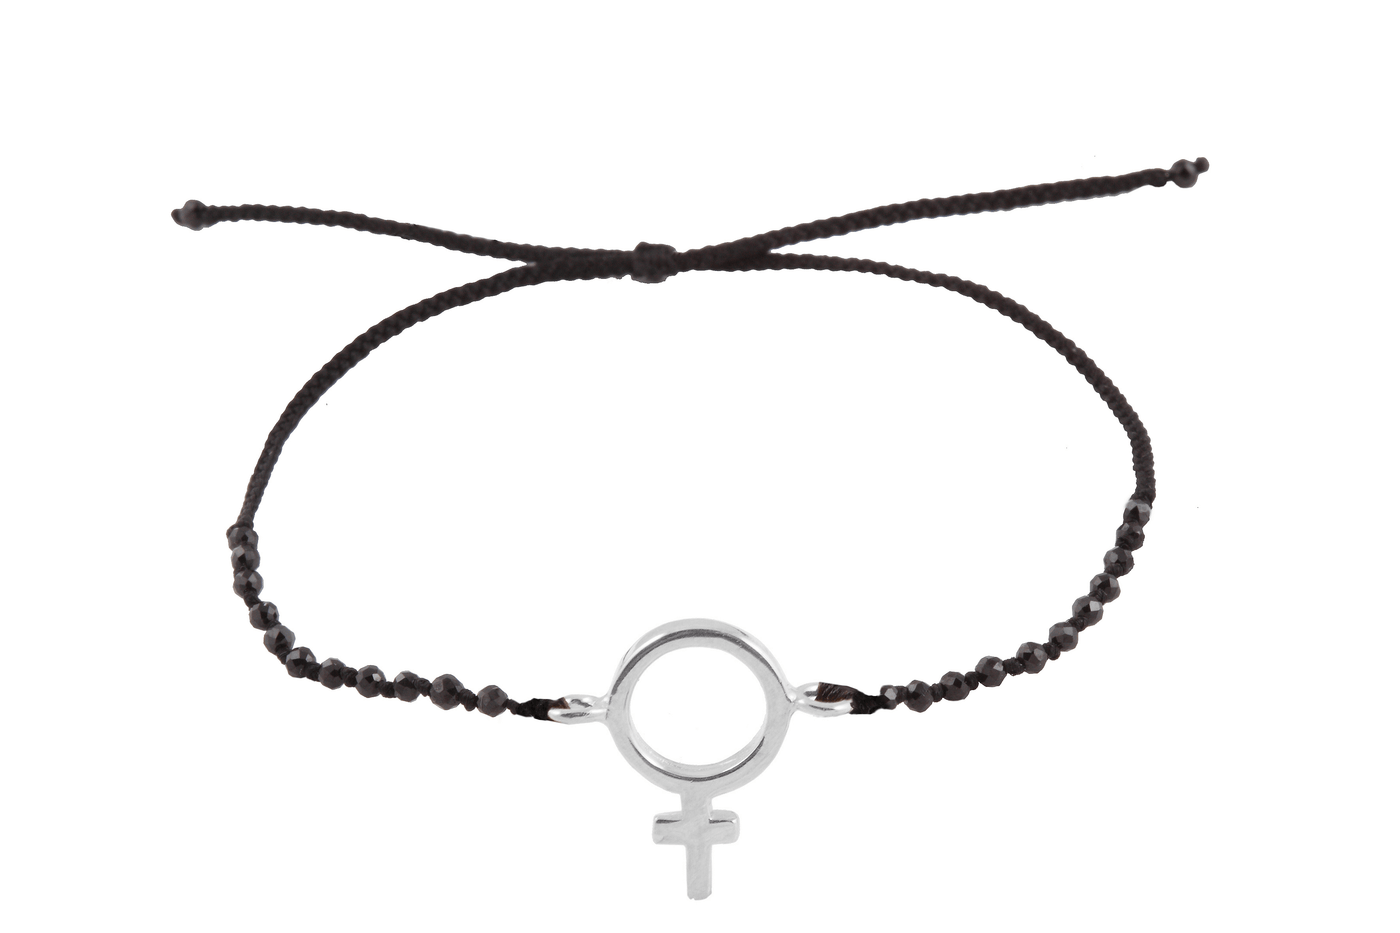 Venus amulet bracelet with beads. Silver